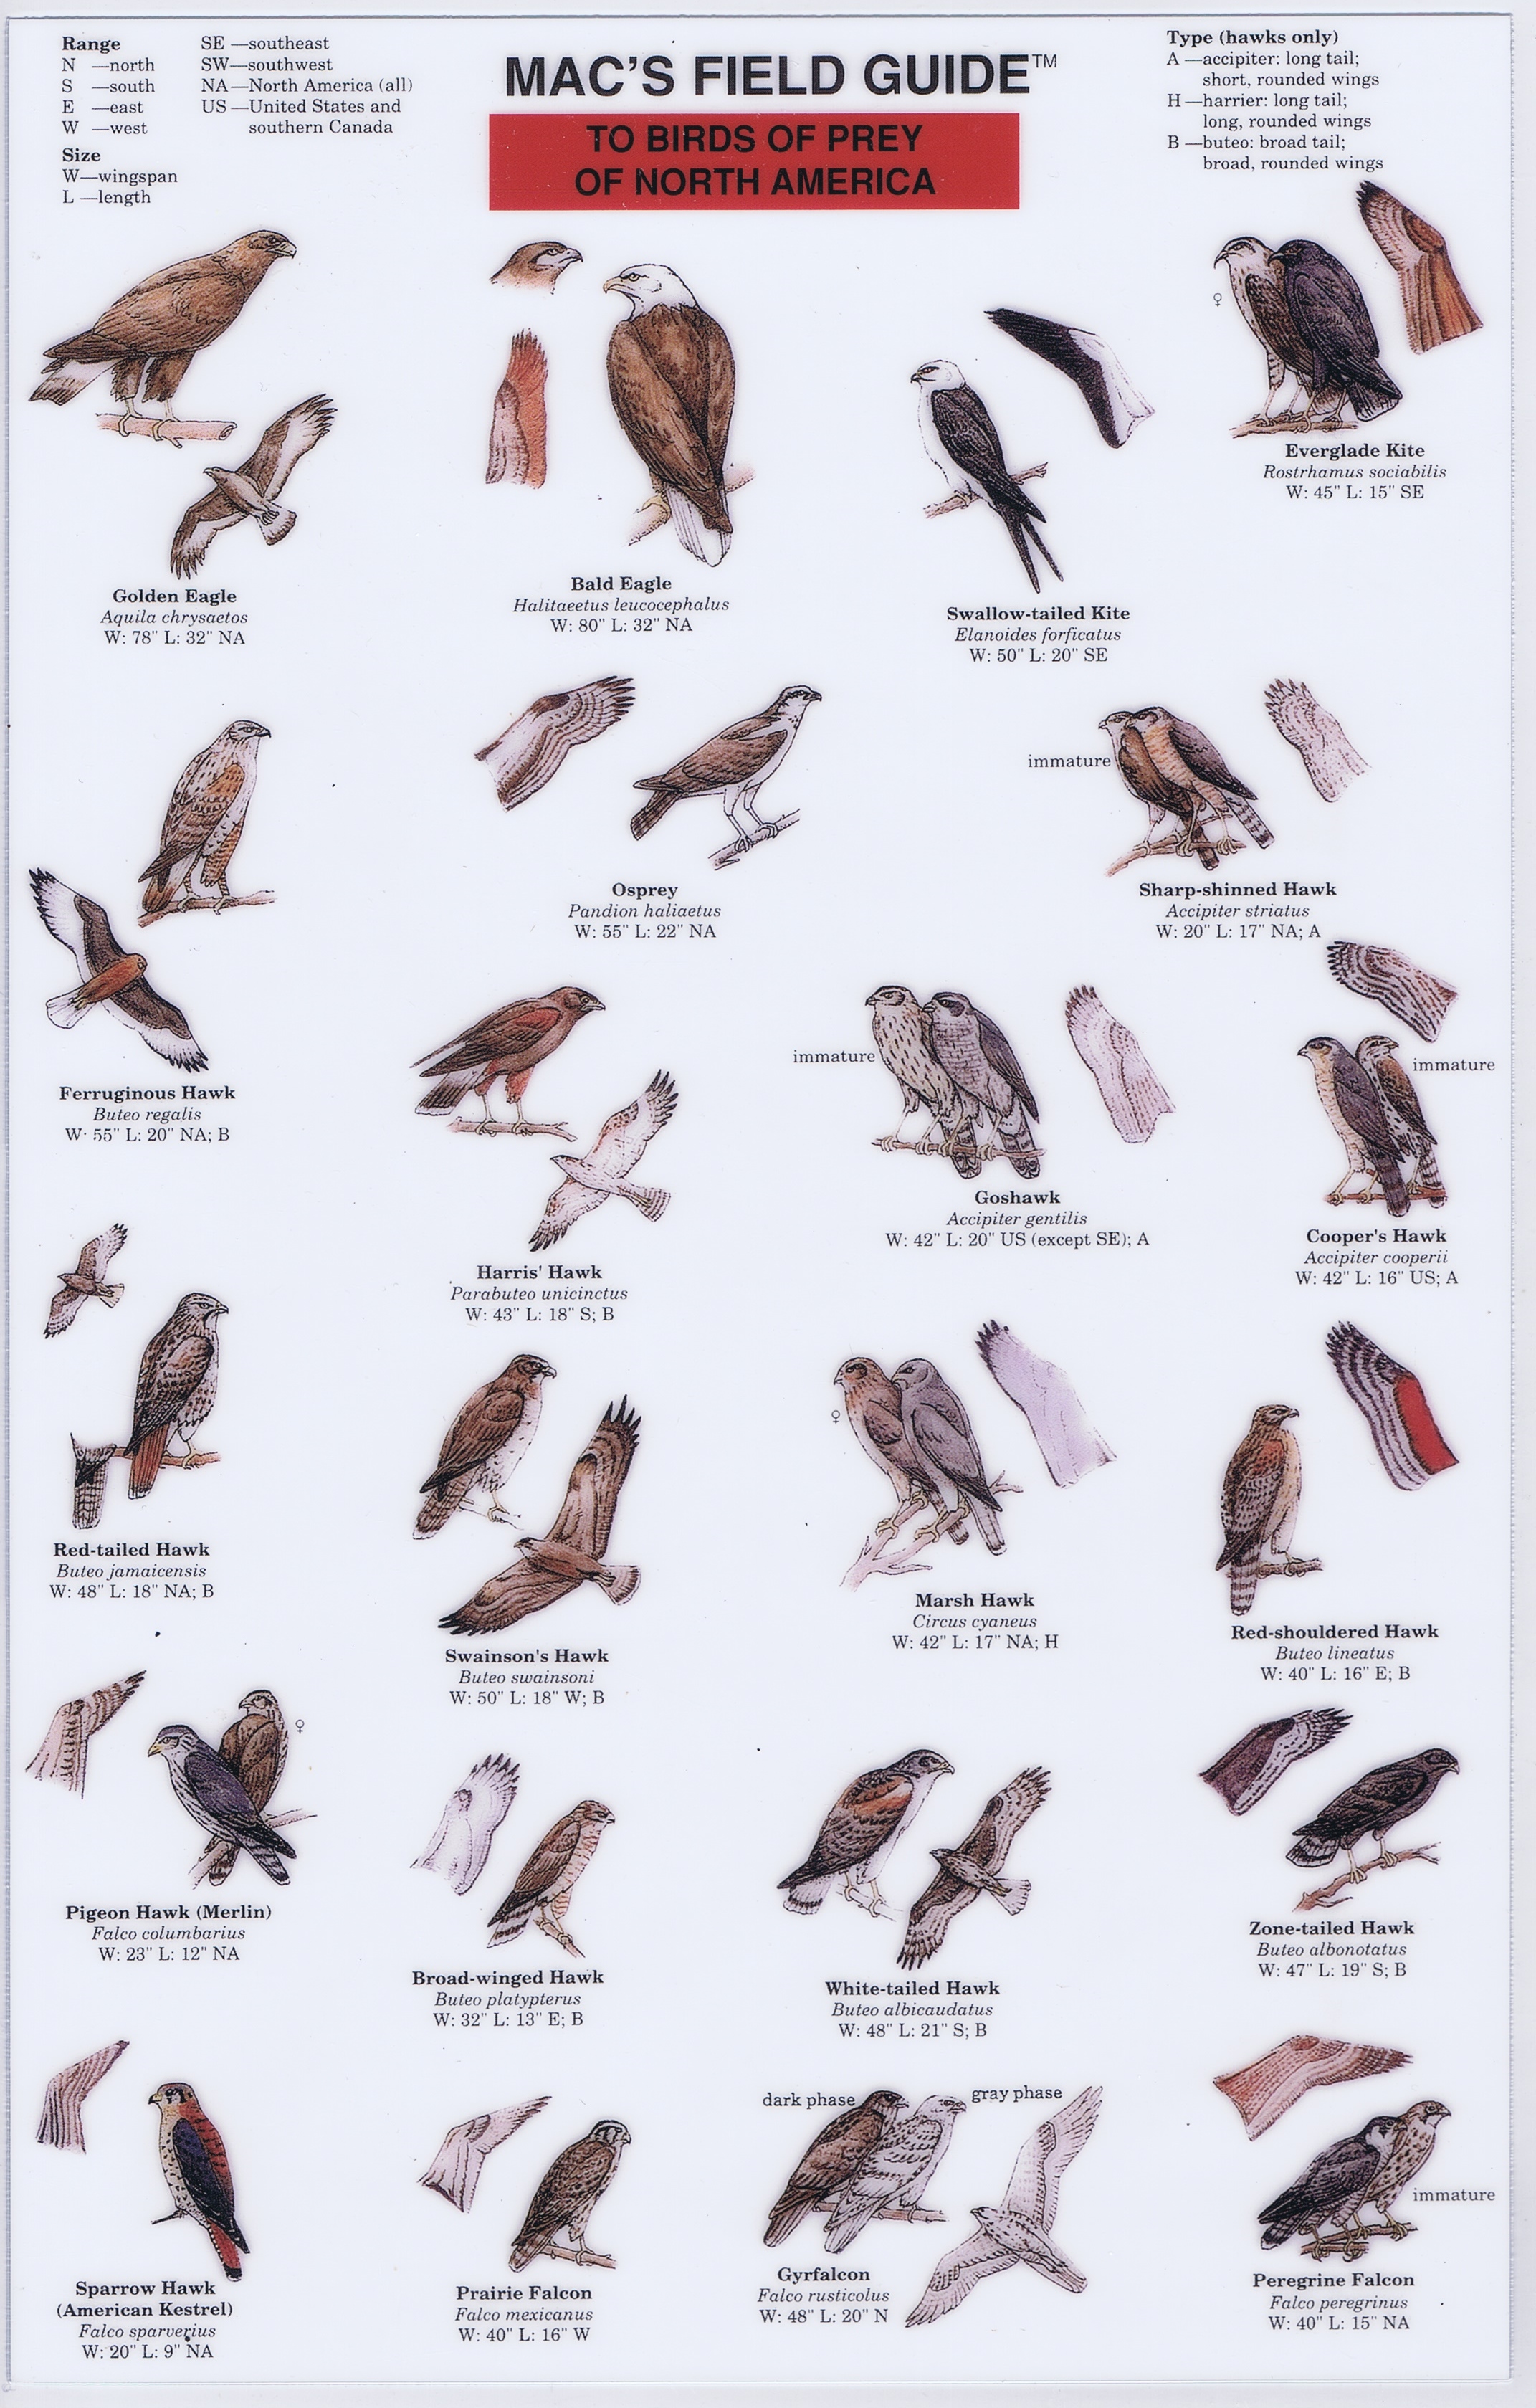 Carnivorous Birds List - Examples of Birds of Prey With Photos